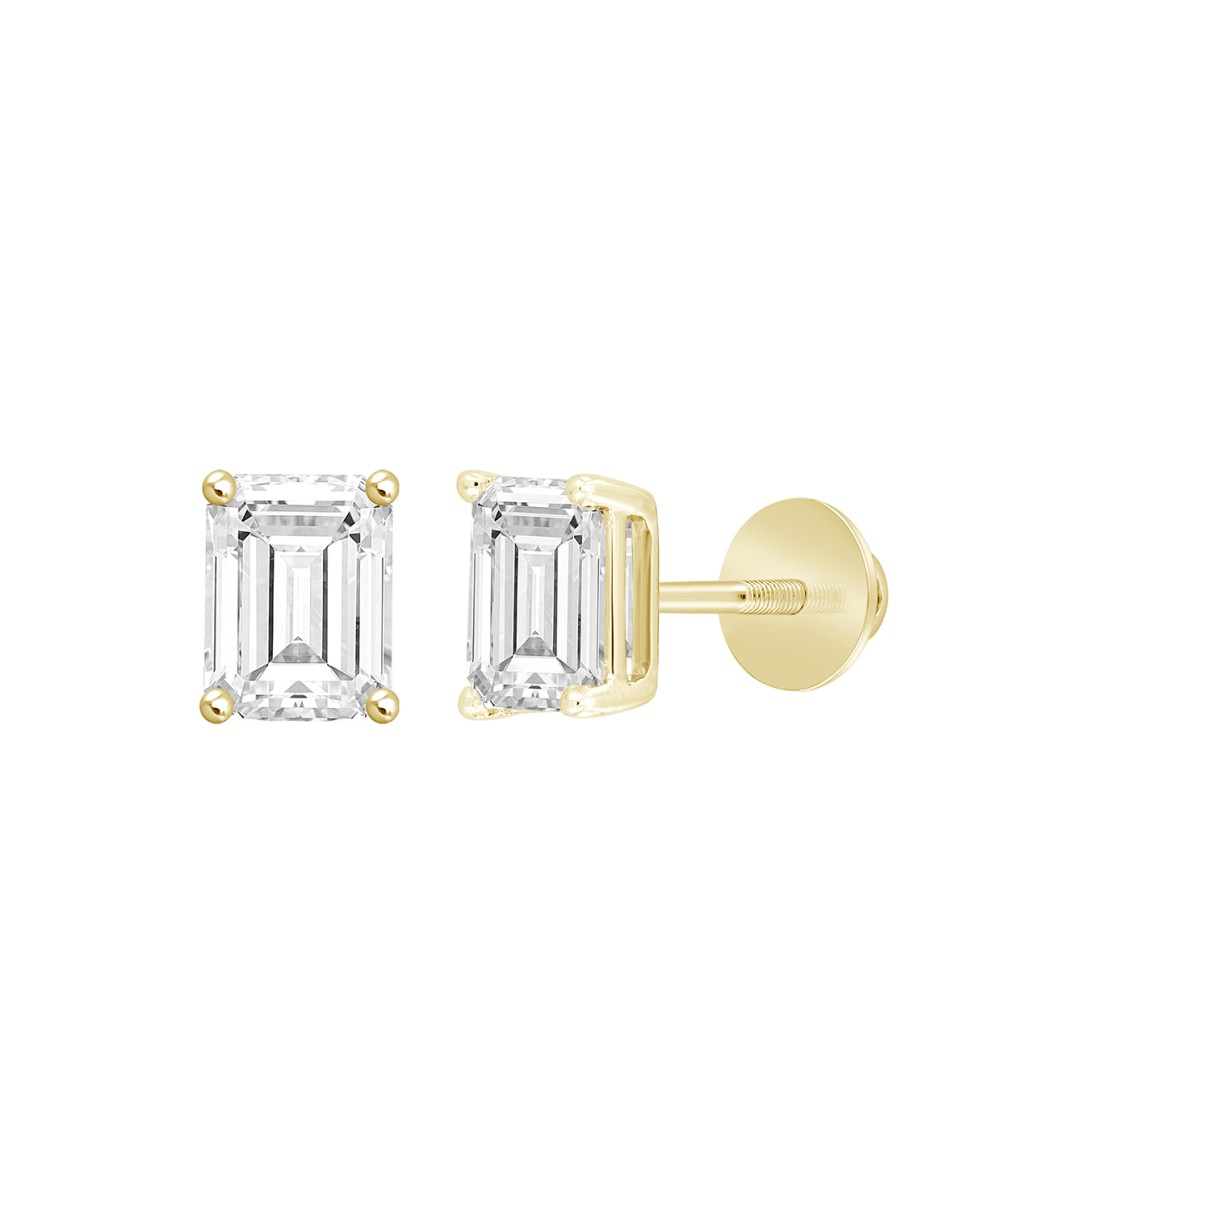 LADIES SOLITAIRE EARRINGS 3CT EMERALD DIAMOND 14K YELLOW GOLD